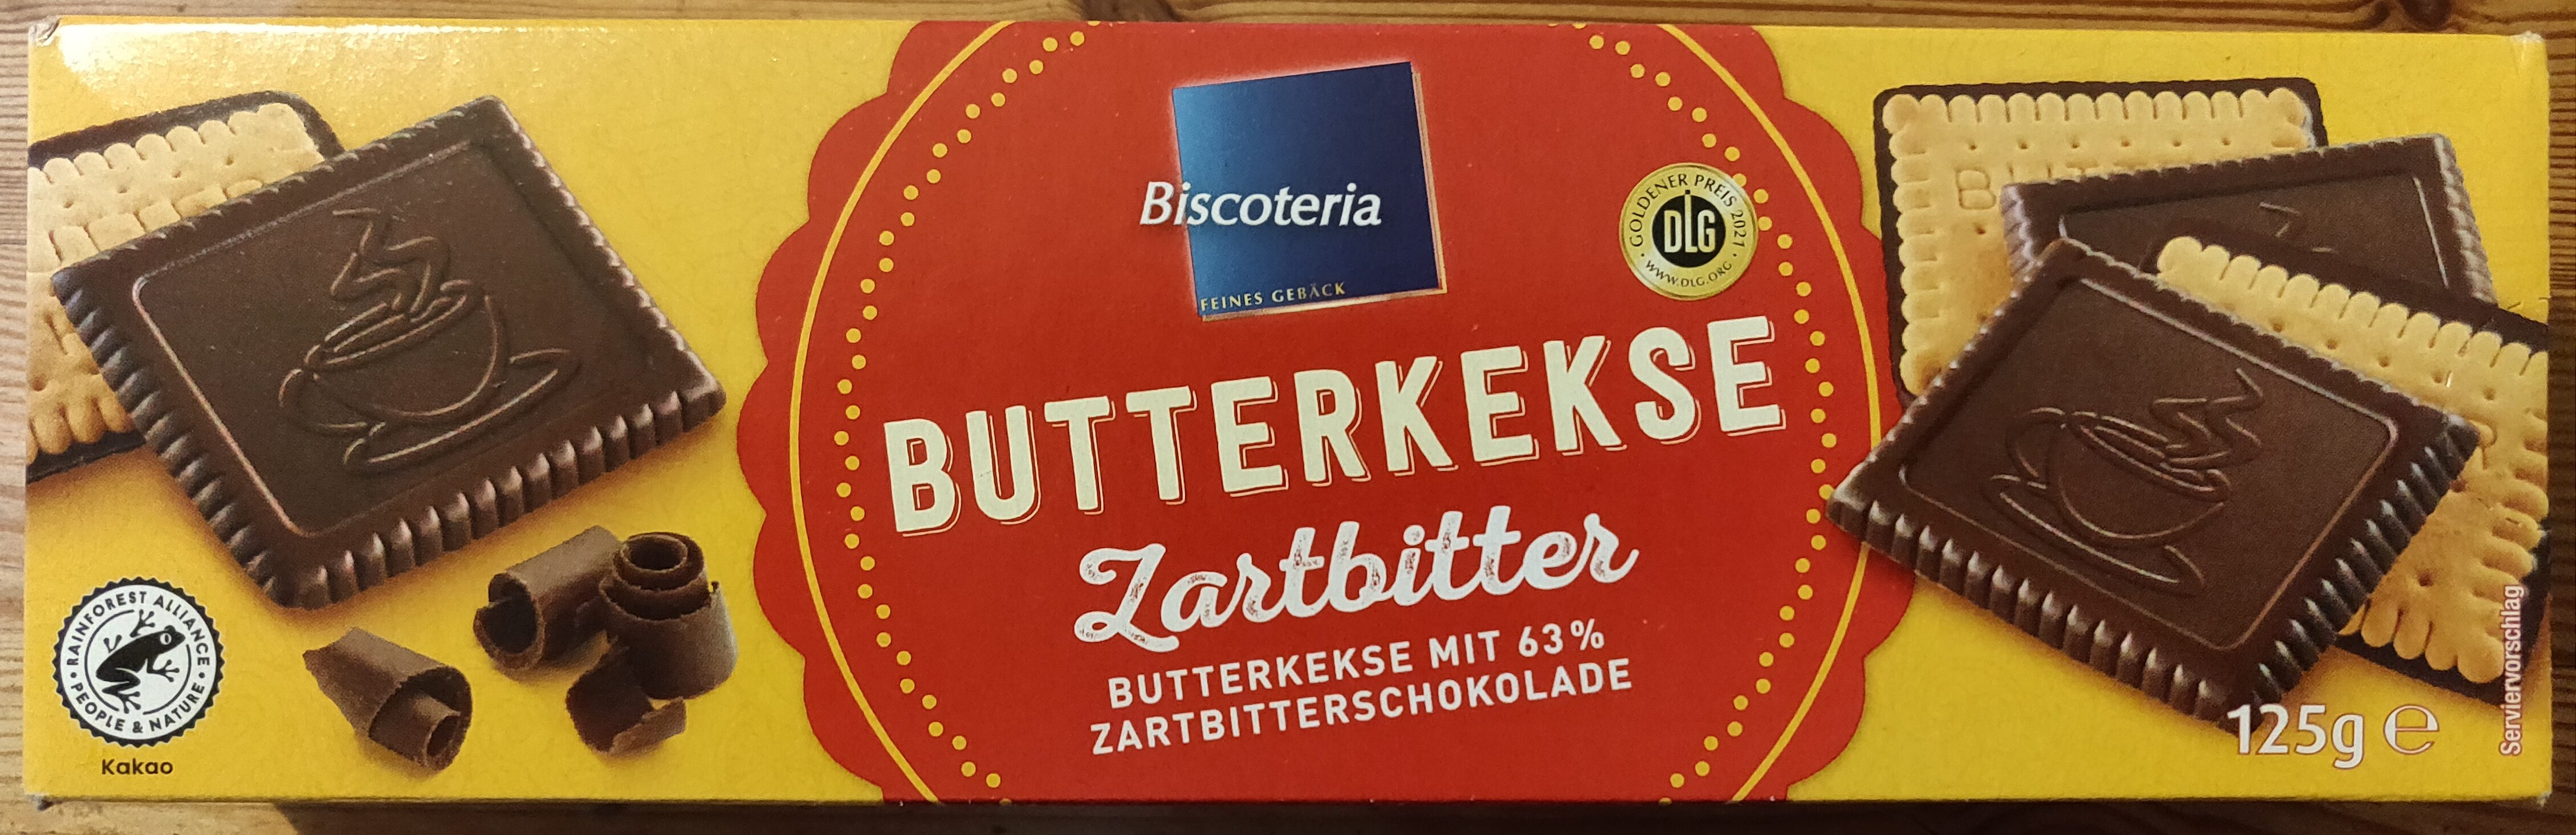 Butterkekse zartbitter - Produkt